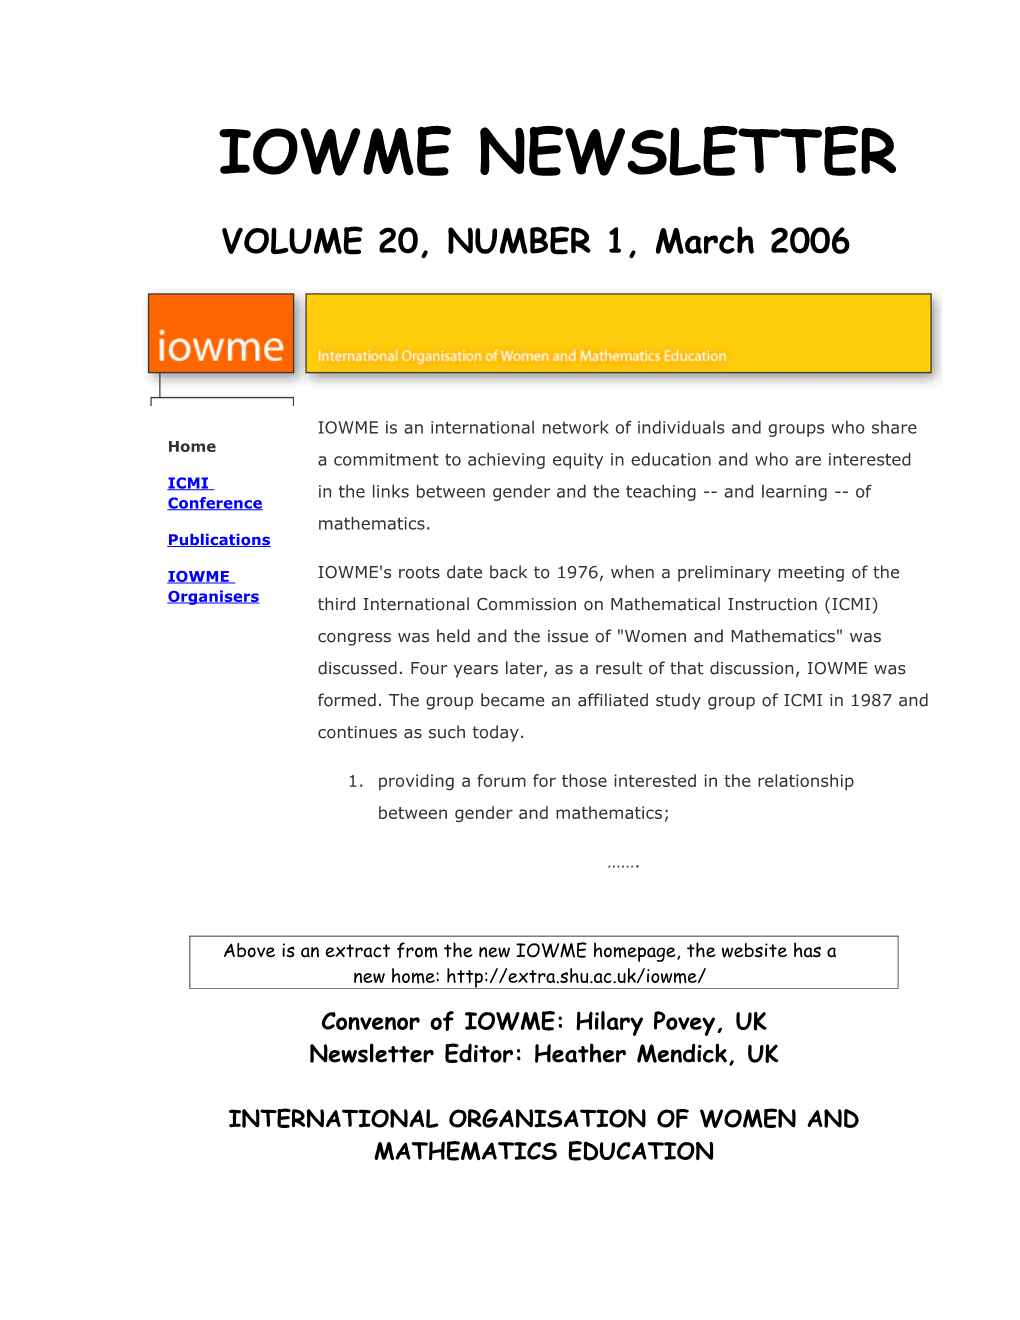 IOWME Newsletter Volume 20, No. 1